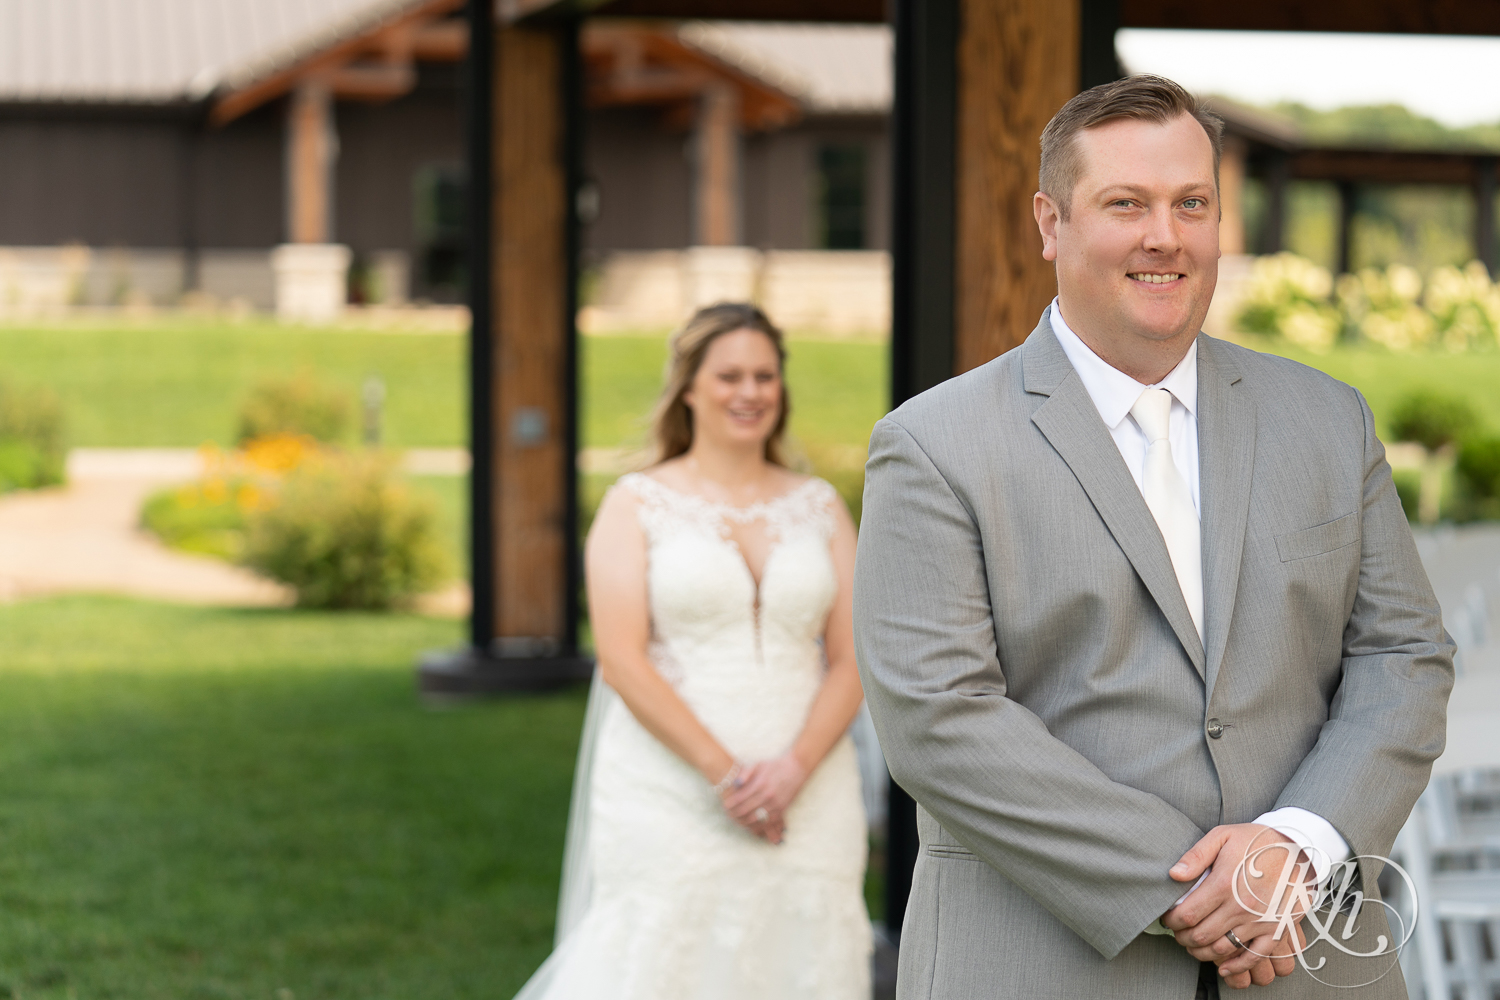 First look between bride and groom at summer wedding at 7 Vines Vineyard in Dellwood, Minnesota.